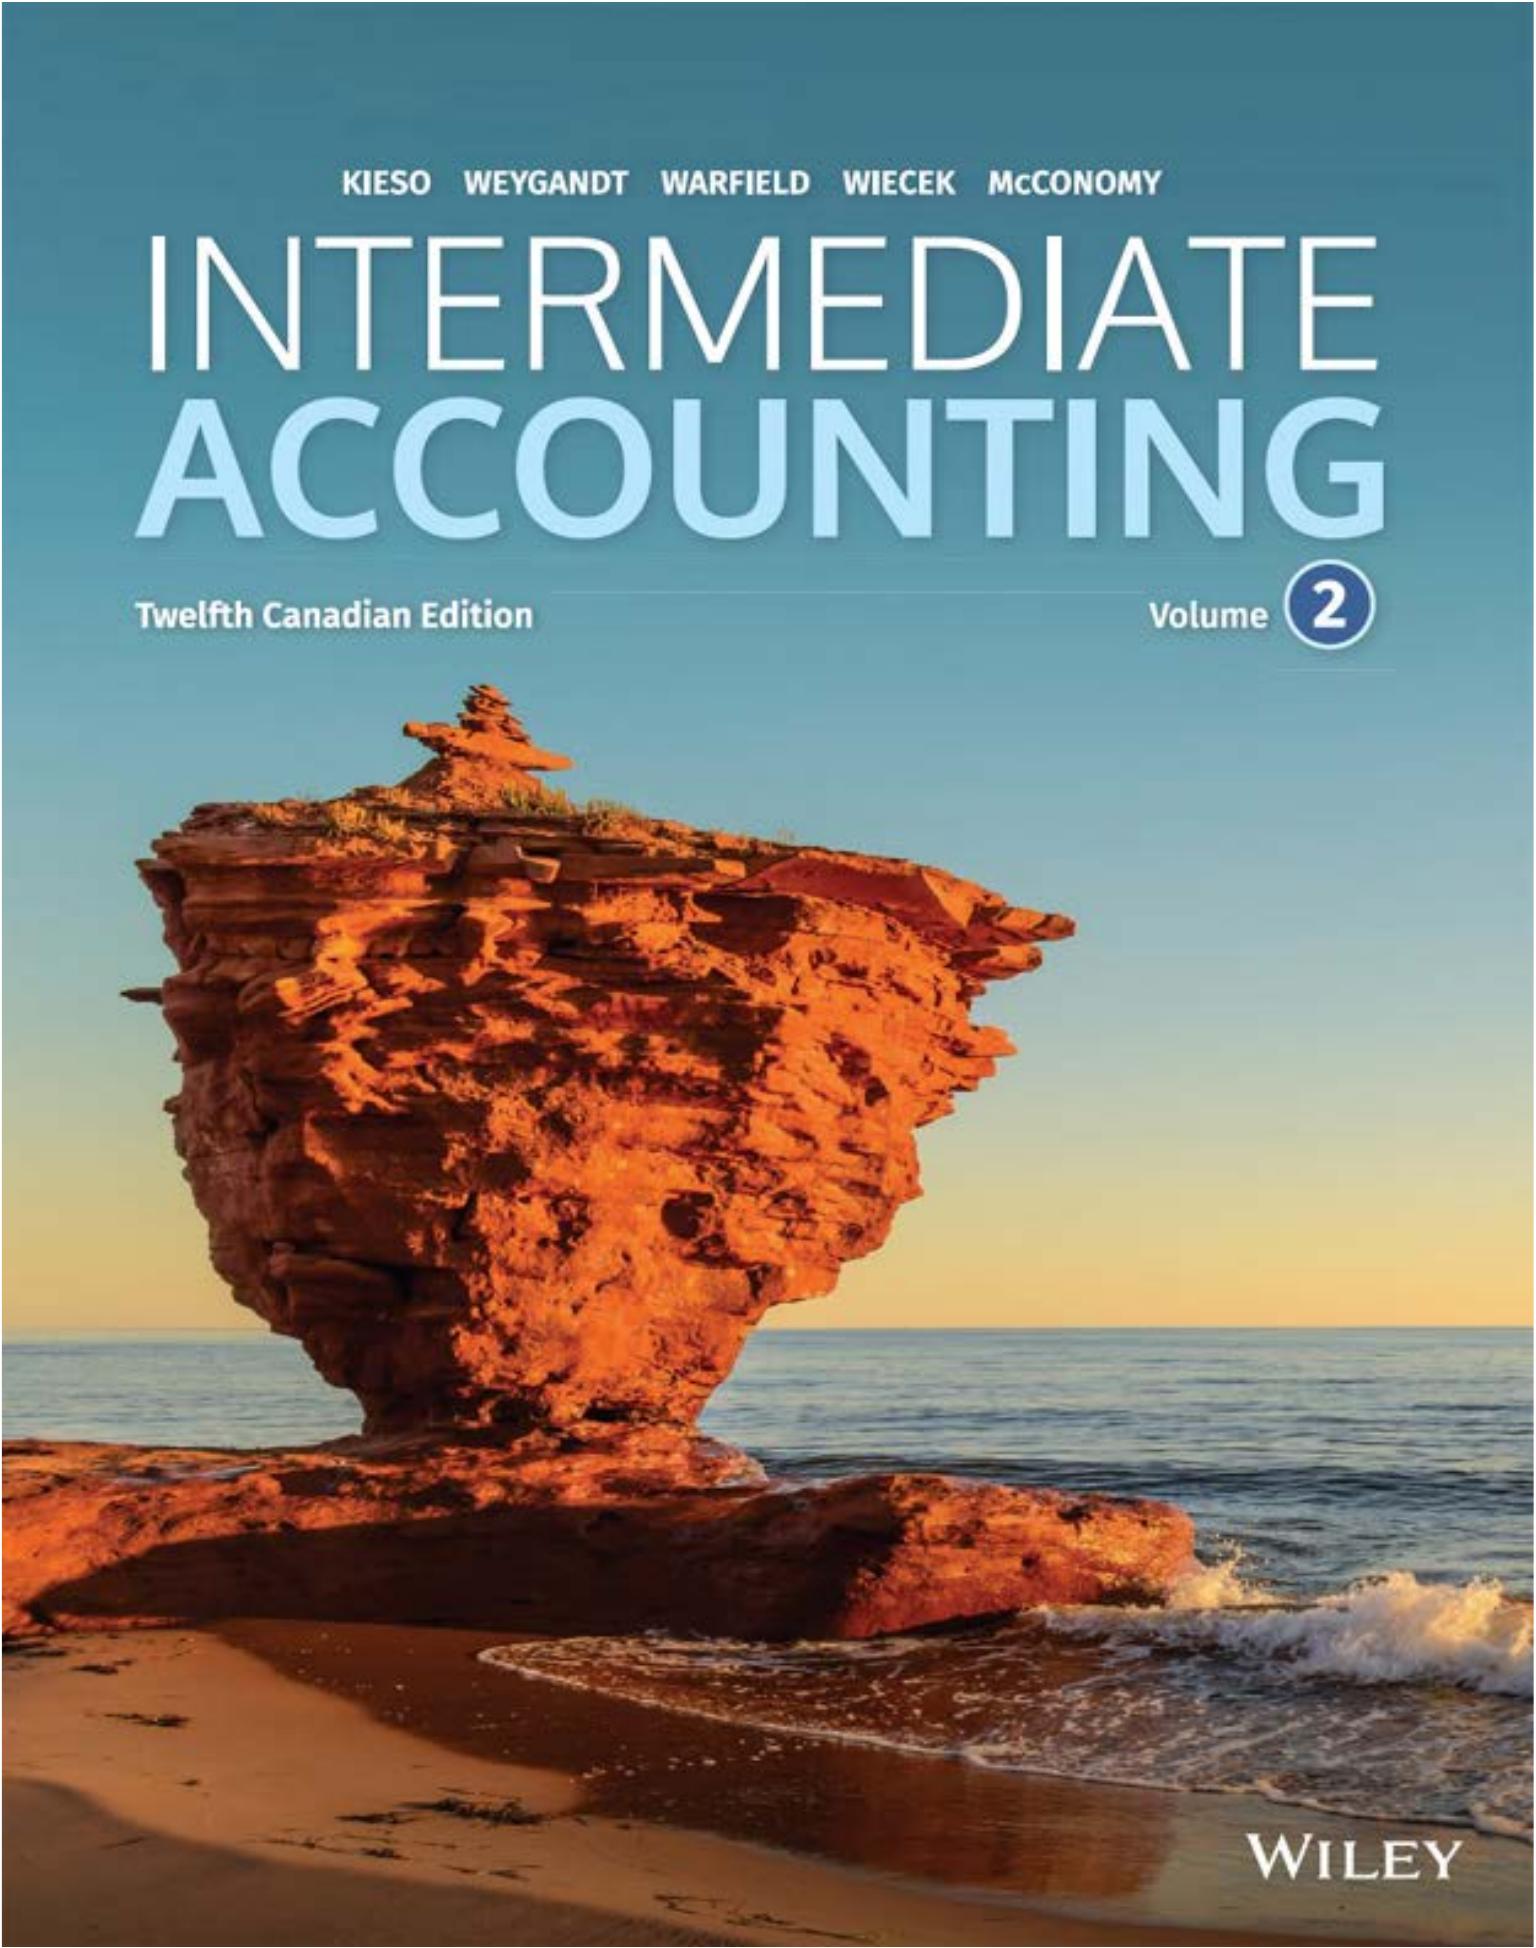 (SM)Intermediate Accounting, Volume 2 7th.zipTextbooks